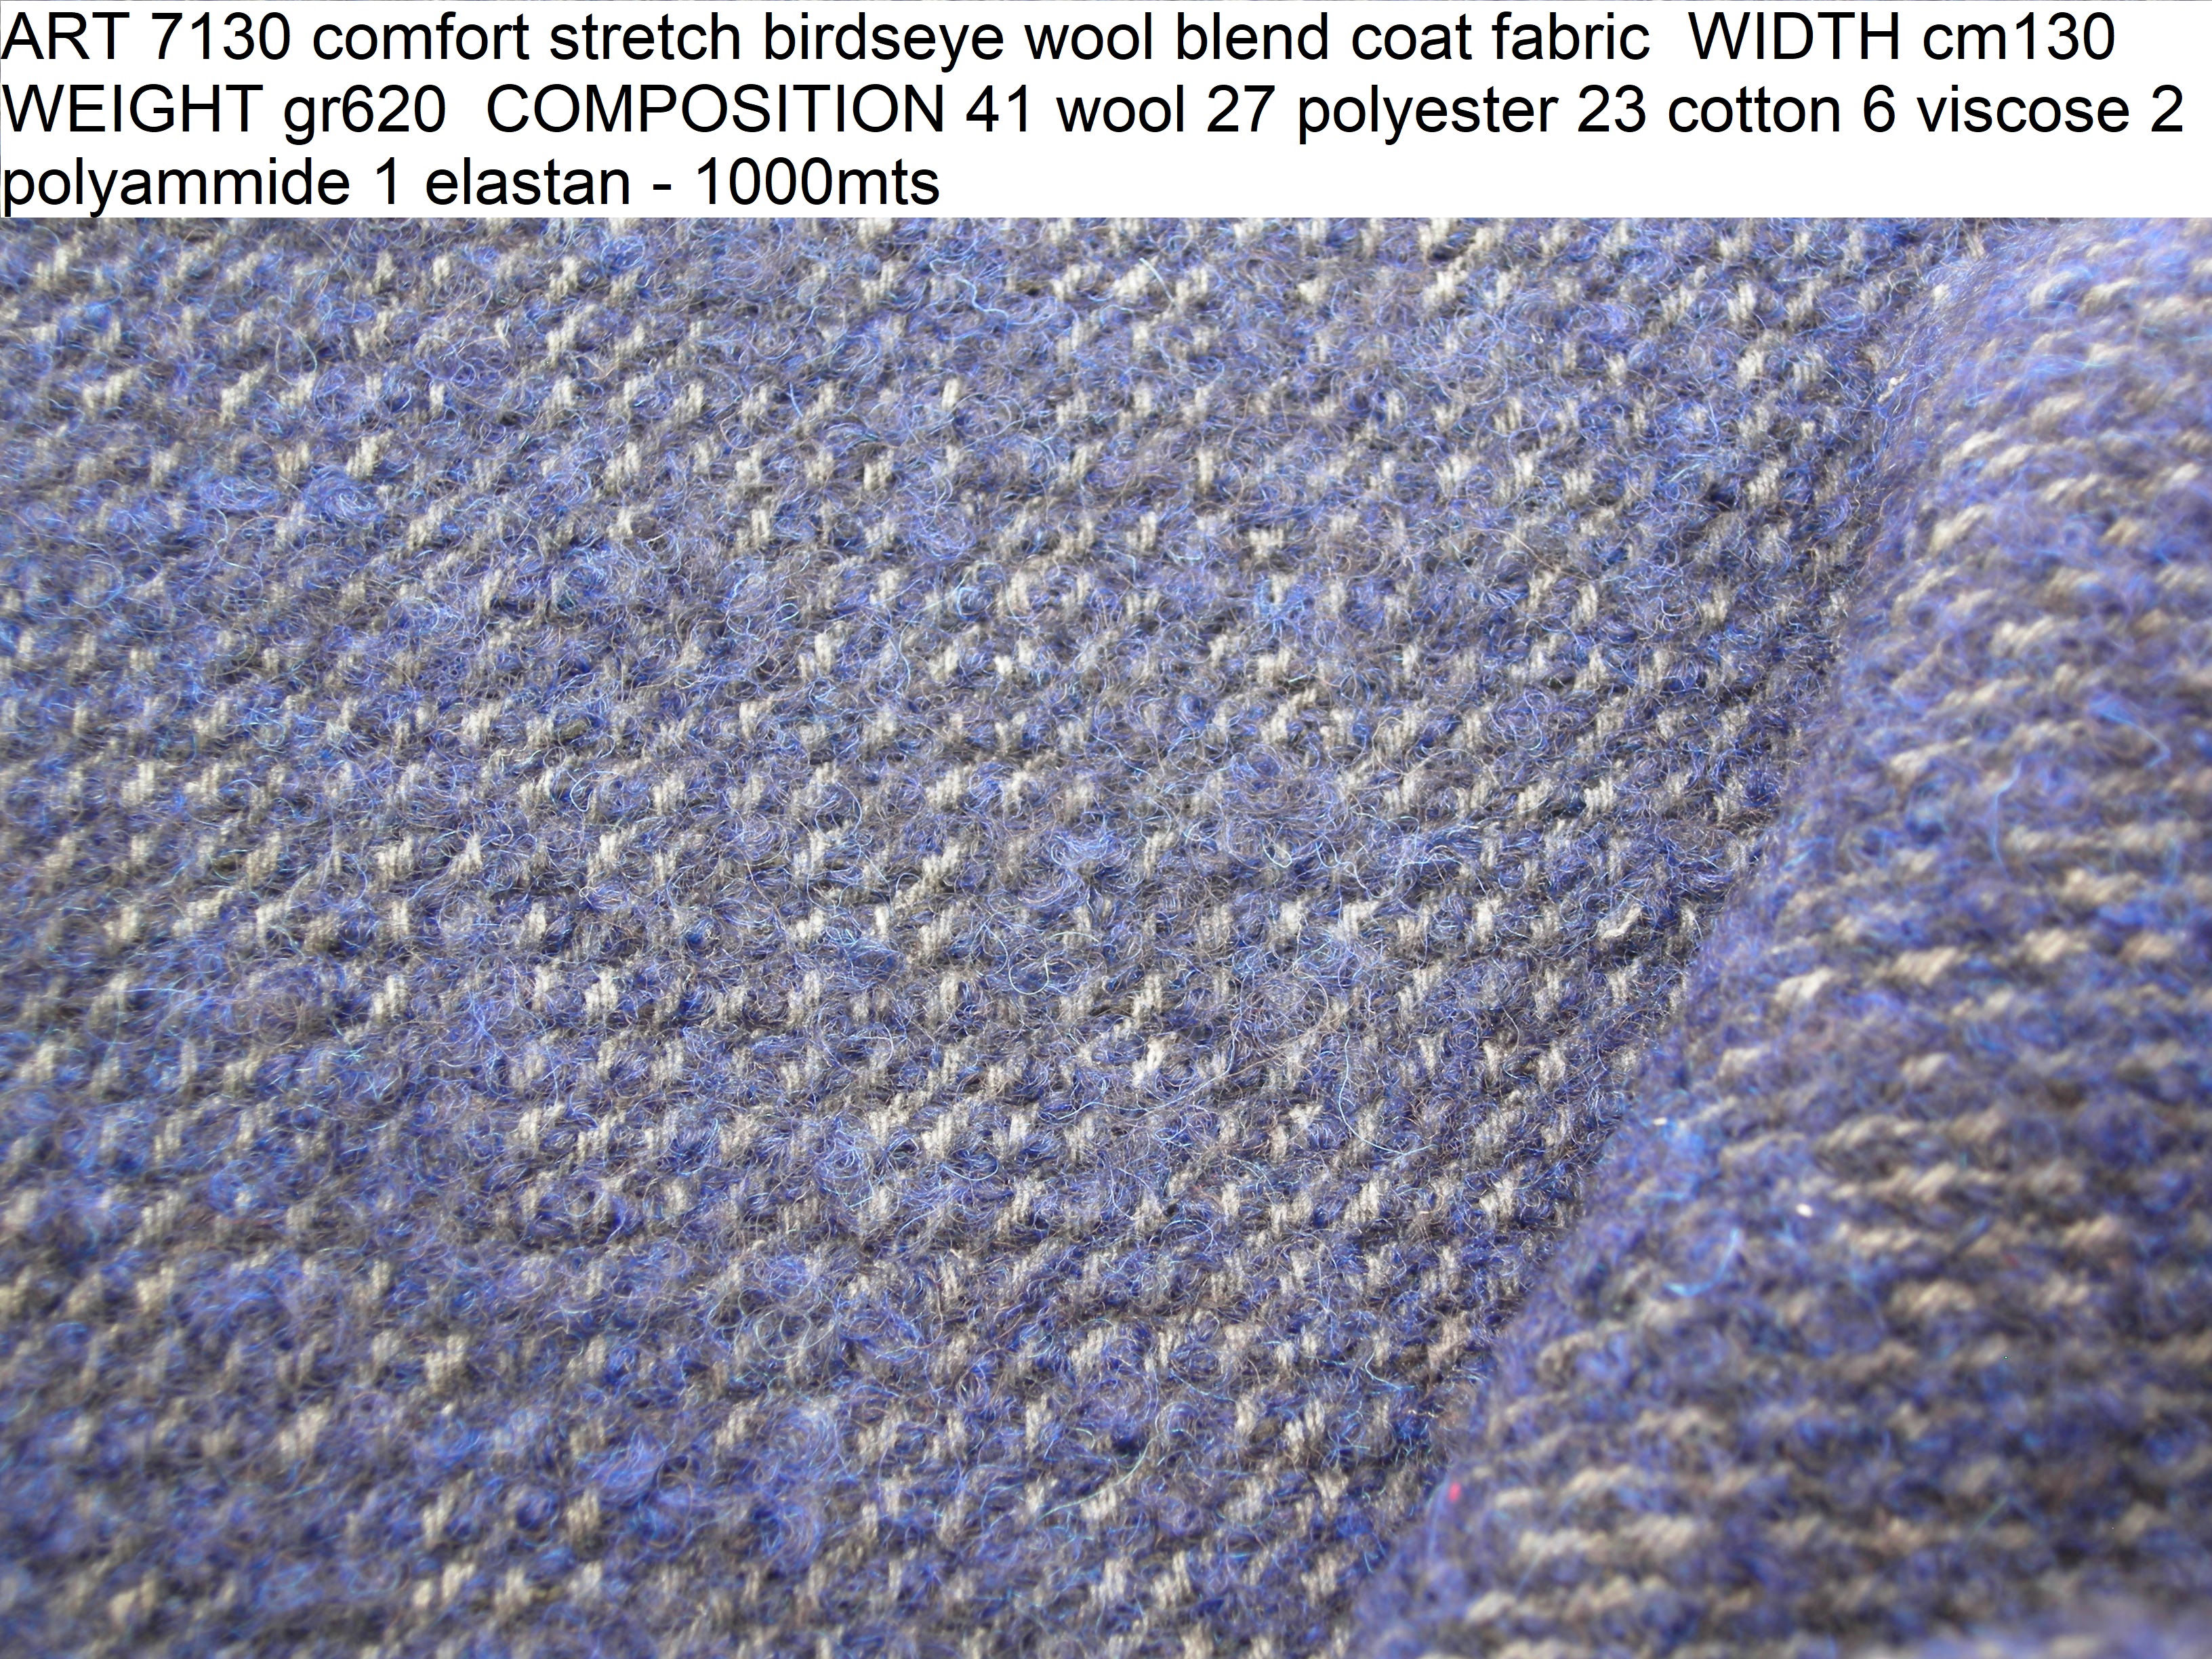 ART 7130 comfort stretch birdseye wool blend coat fabric WIDTH cm130 WEIGHT gr620 COMPOSITION 41 wool 27 polyester 23 cotton 6 viscose 2 polyammide 1 elastan - 1000mts